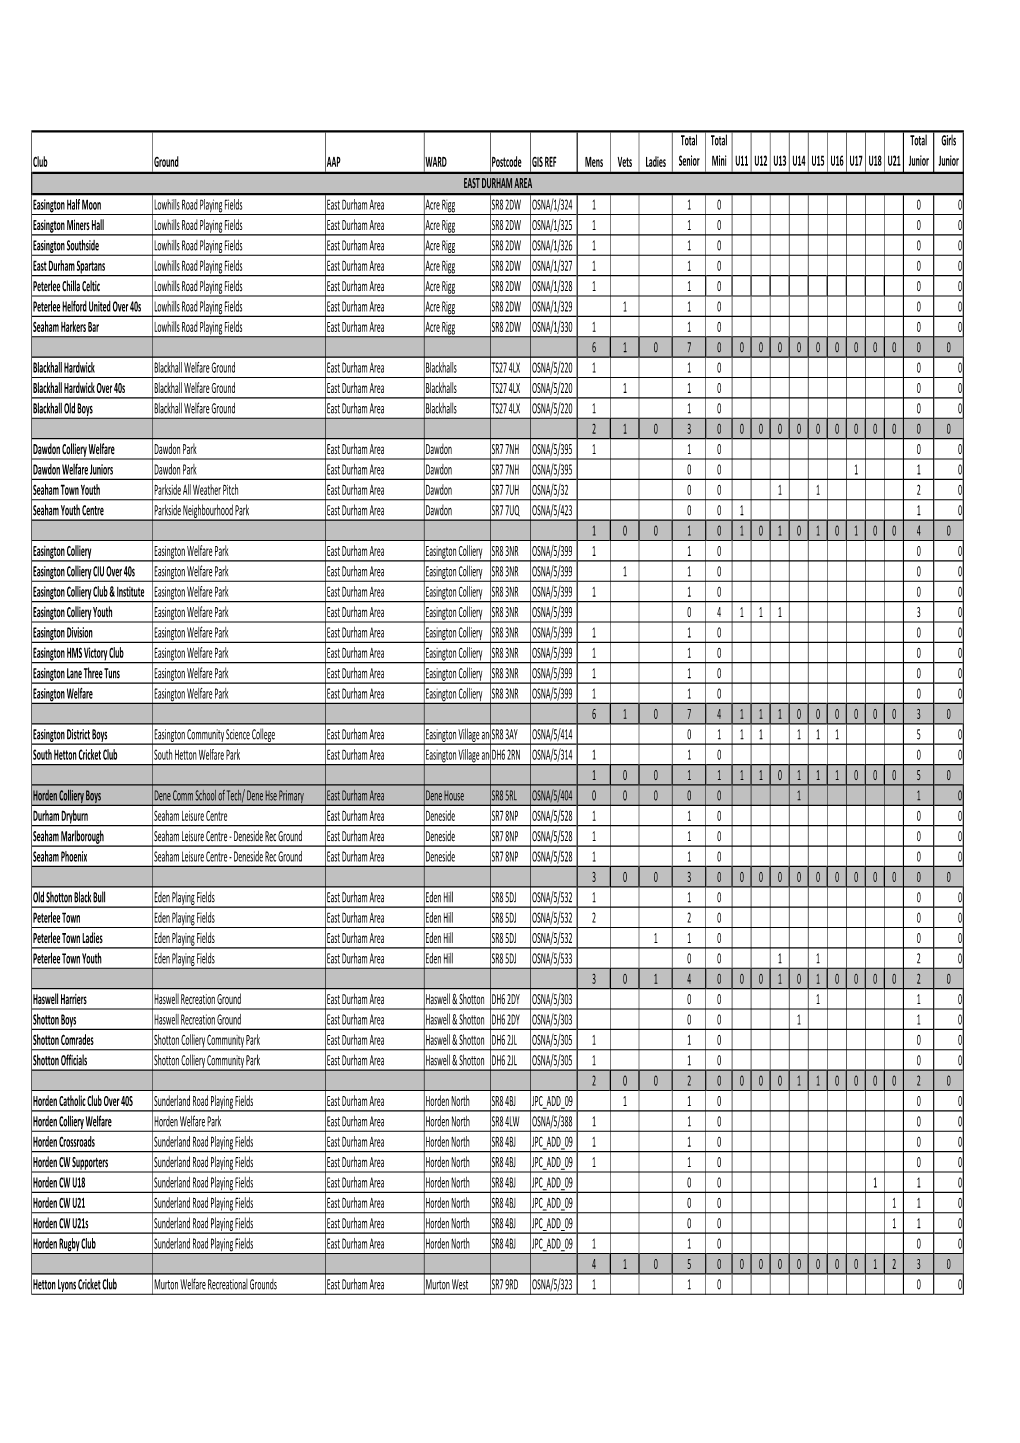 County Durham Team Data Complete